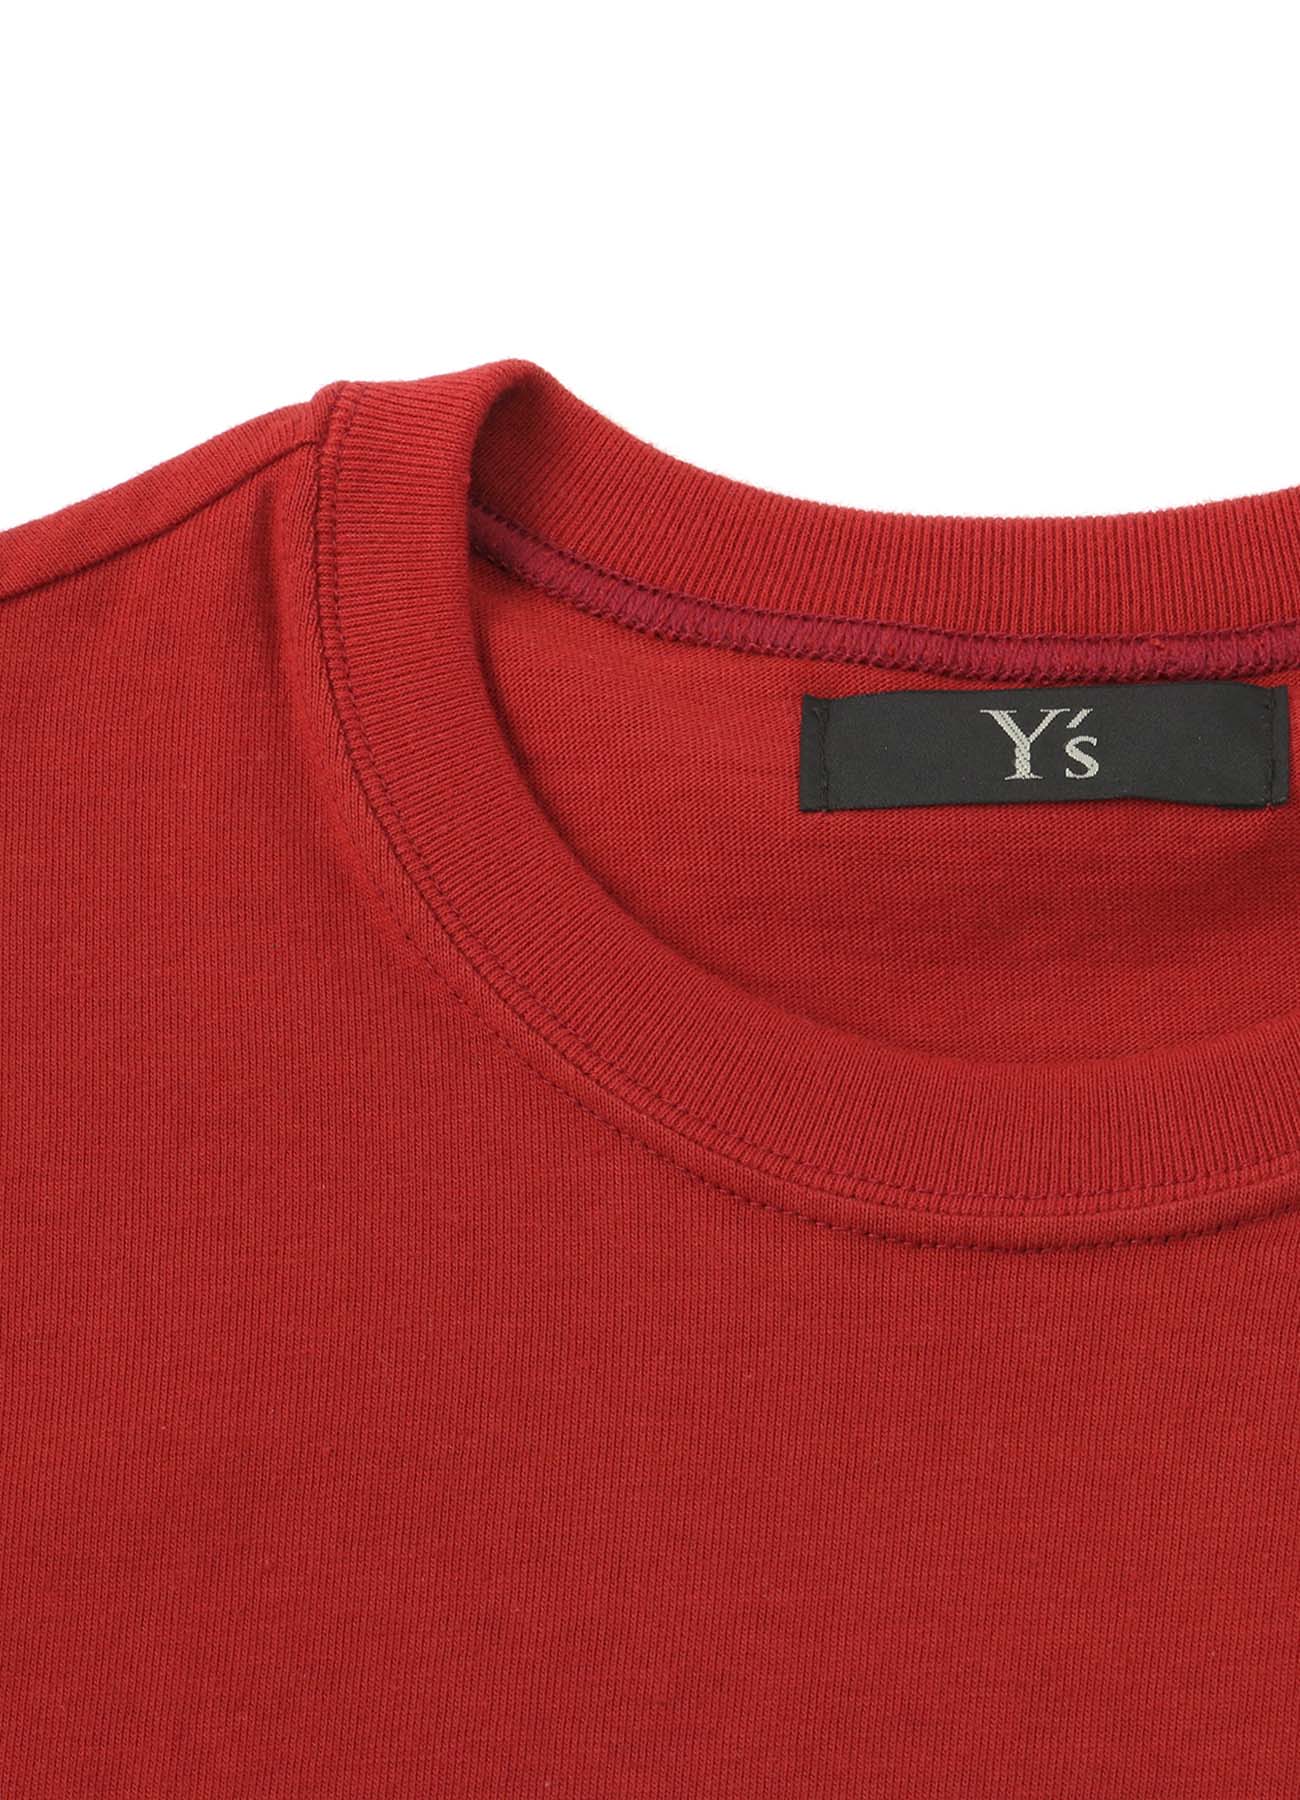 -Online EXCLUSIVE- Y's logo T-shirt